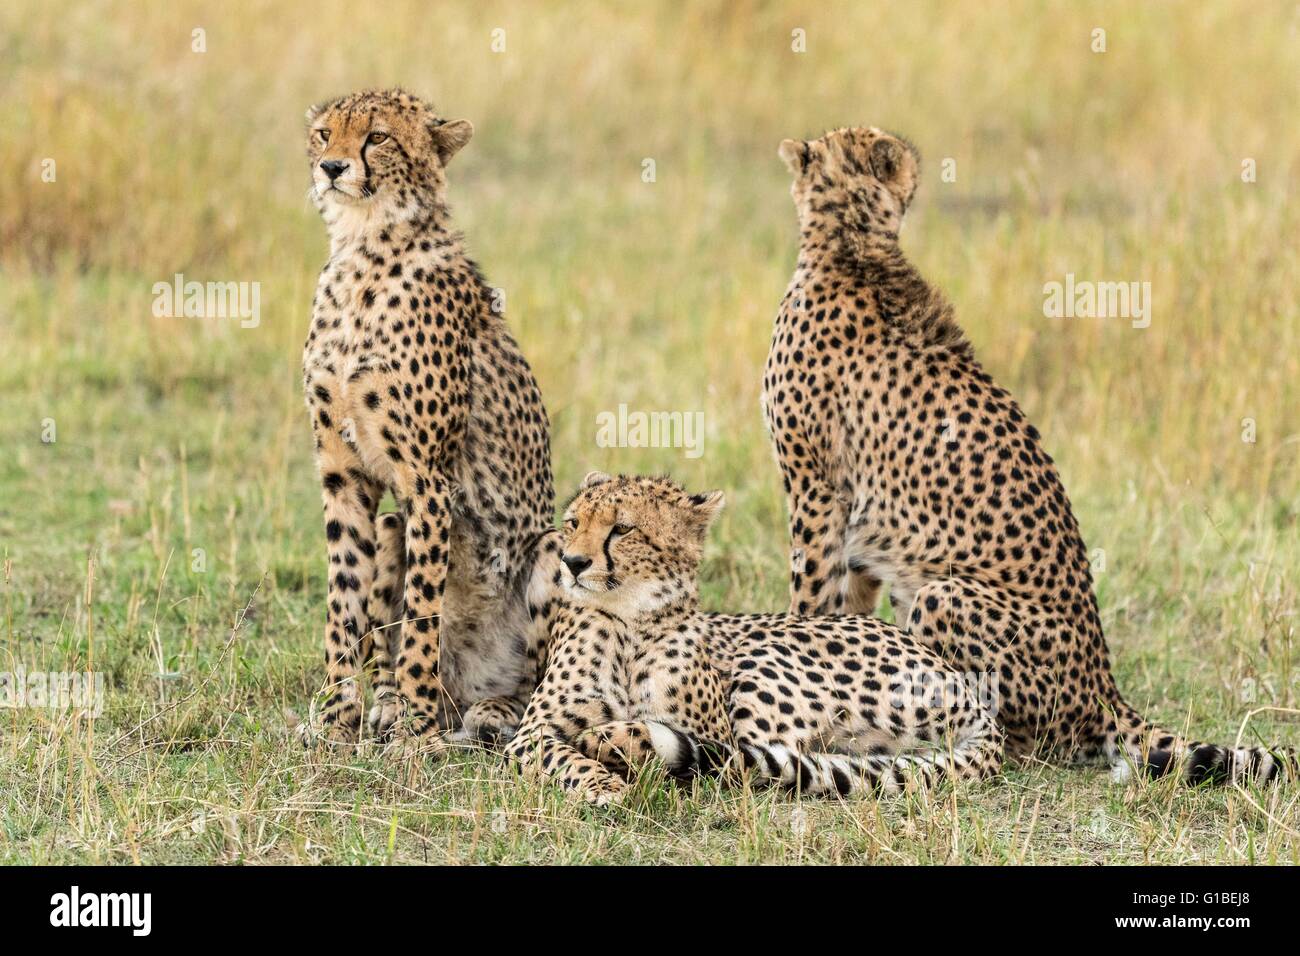 Kenia, Masai Mara Wildreservat, Cheetah (Acinonyx Jubatus), jungen 15 Monate alt Stockfoto